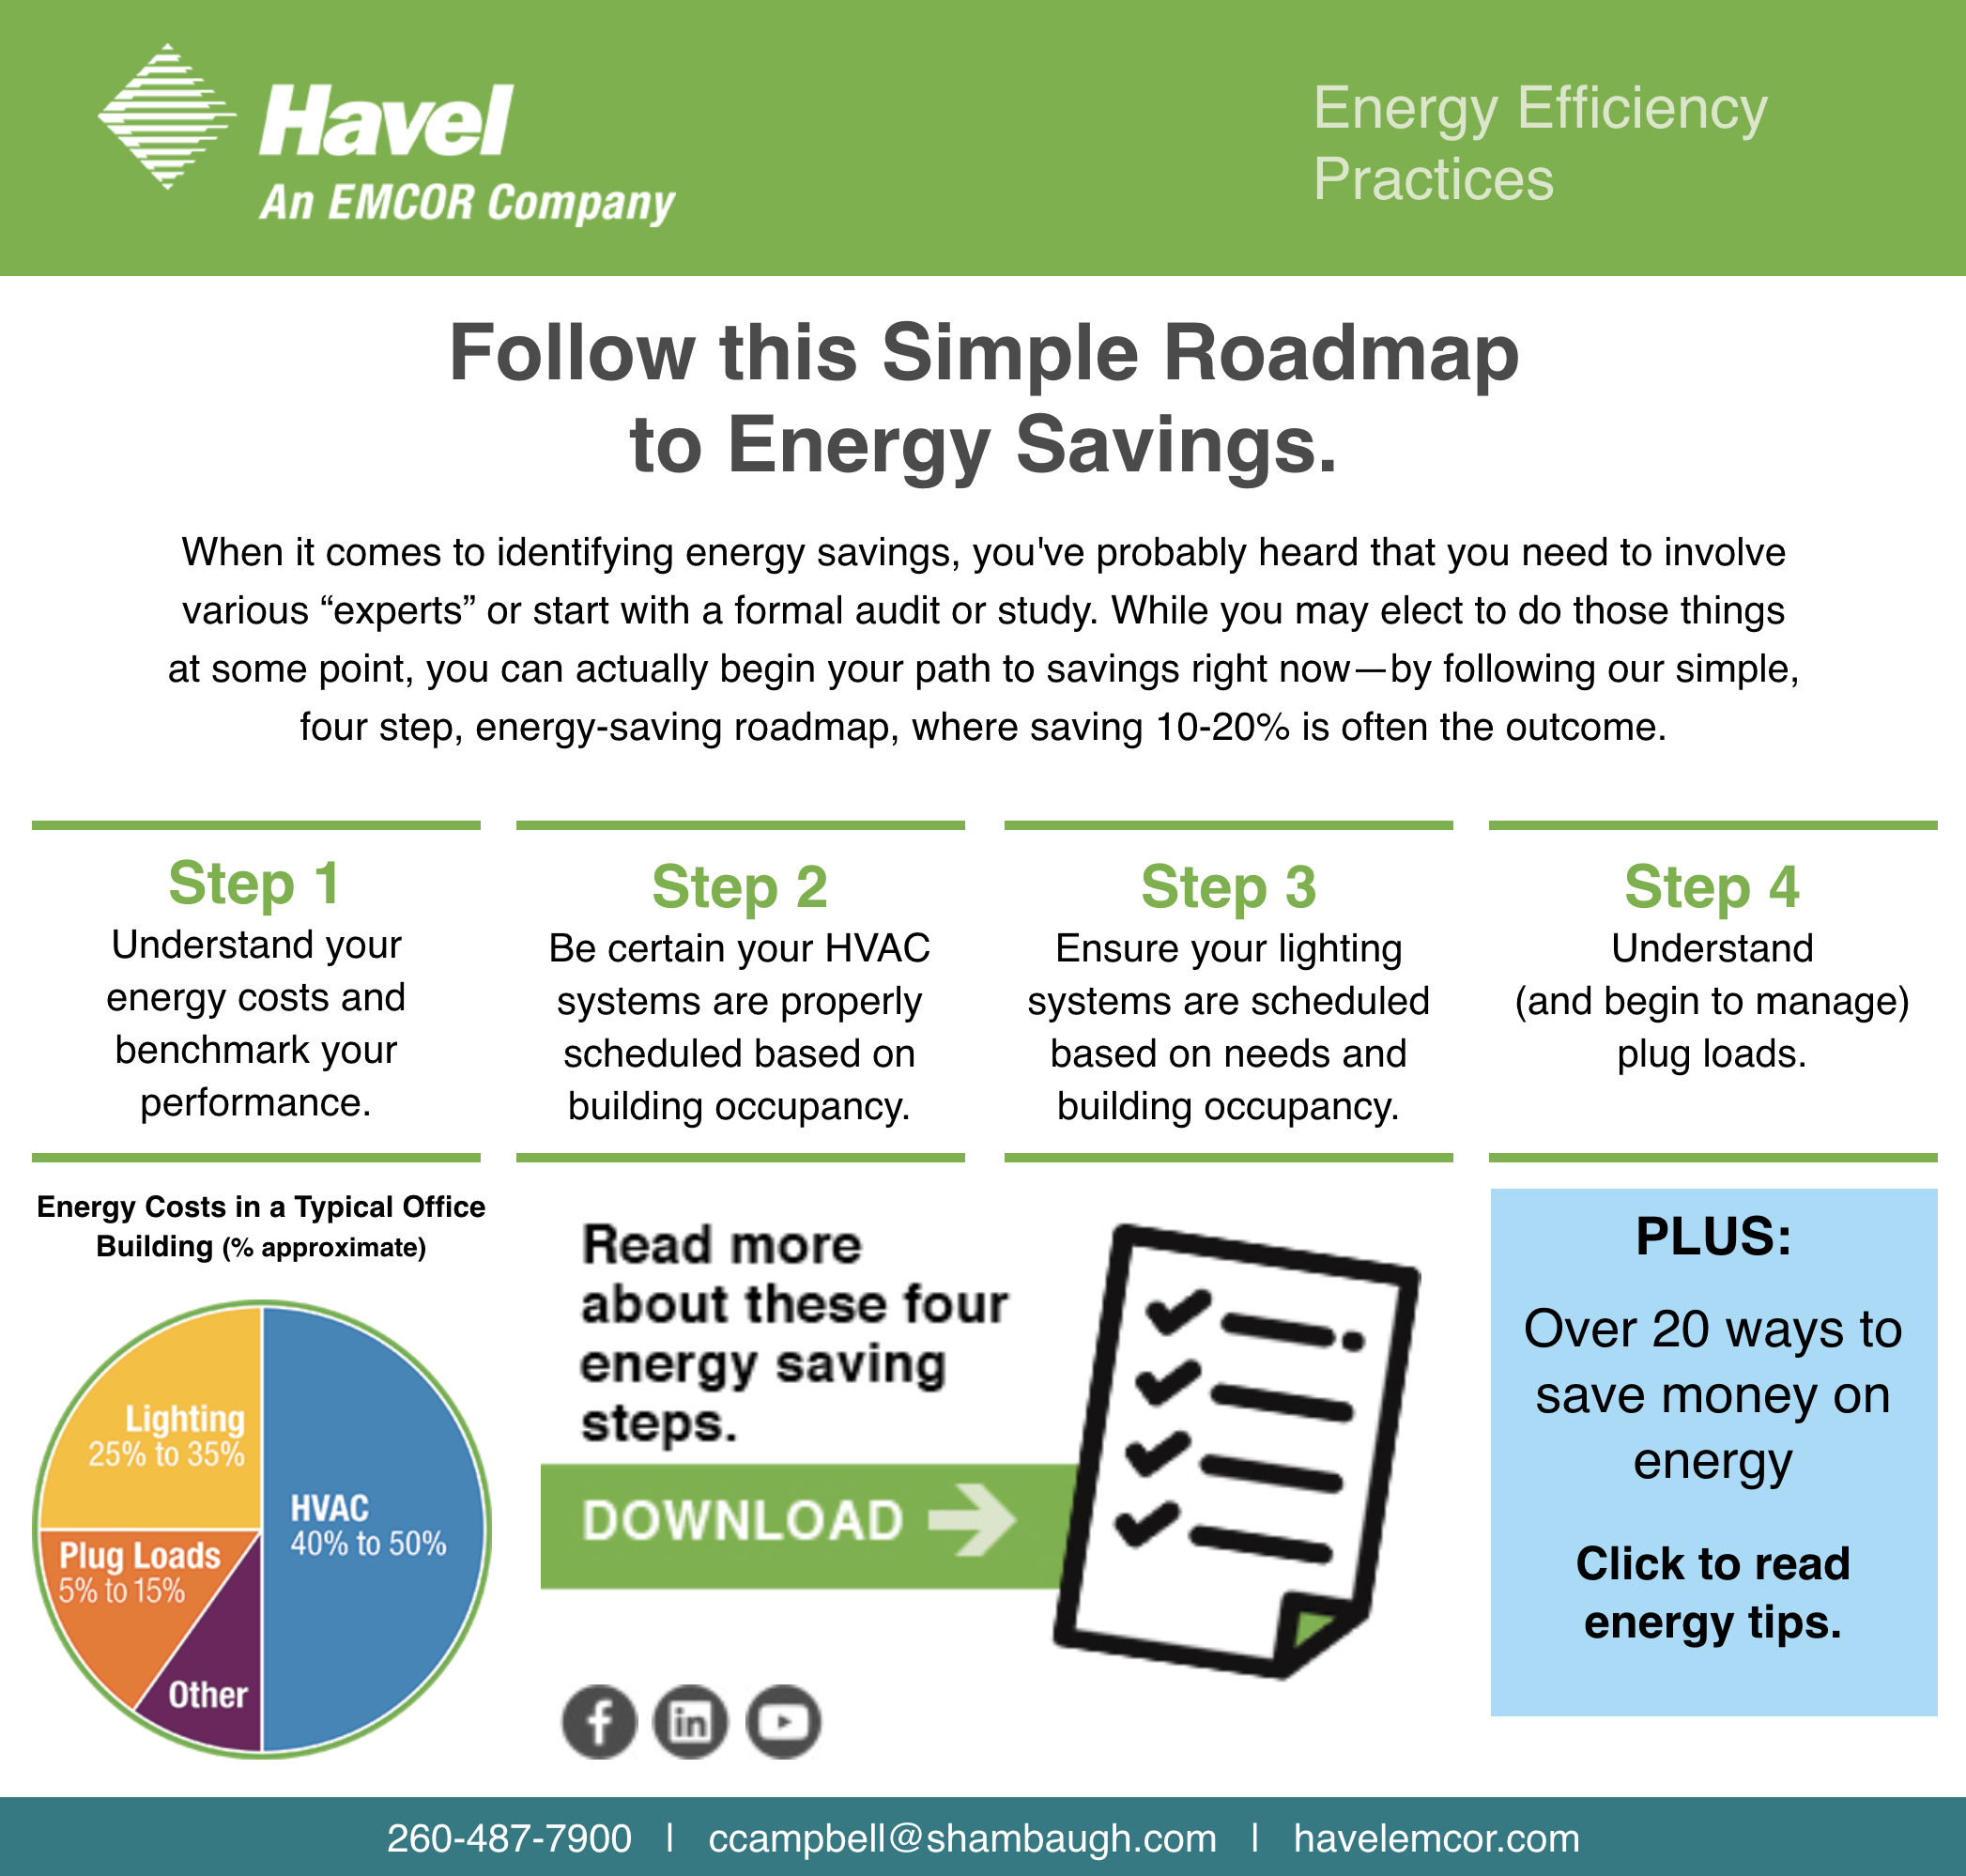 Follow this Simple Roadmap to Energy Savings.